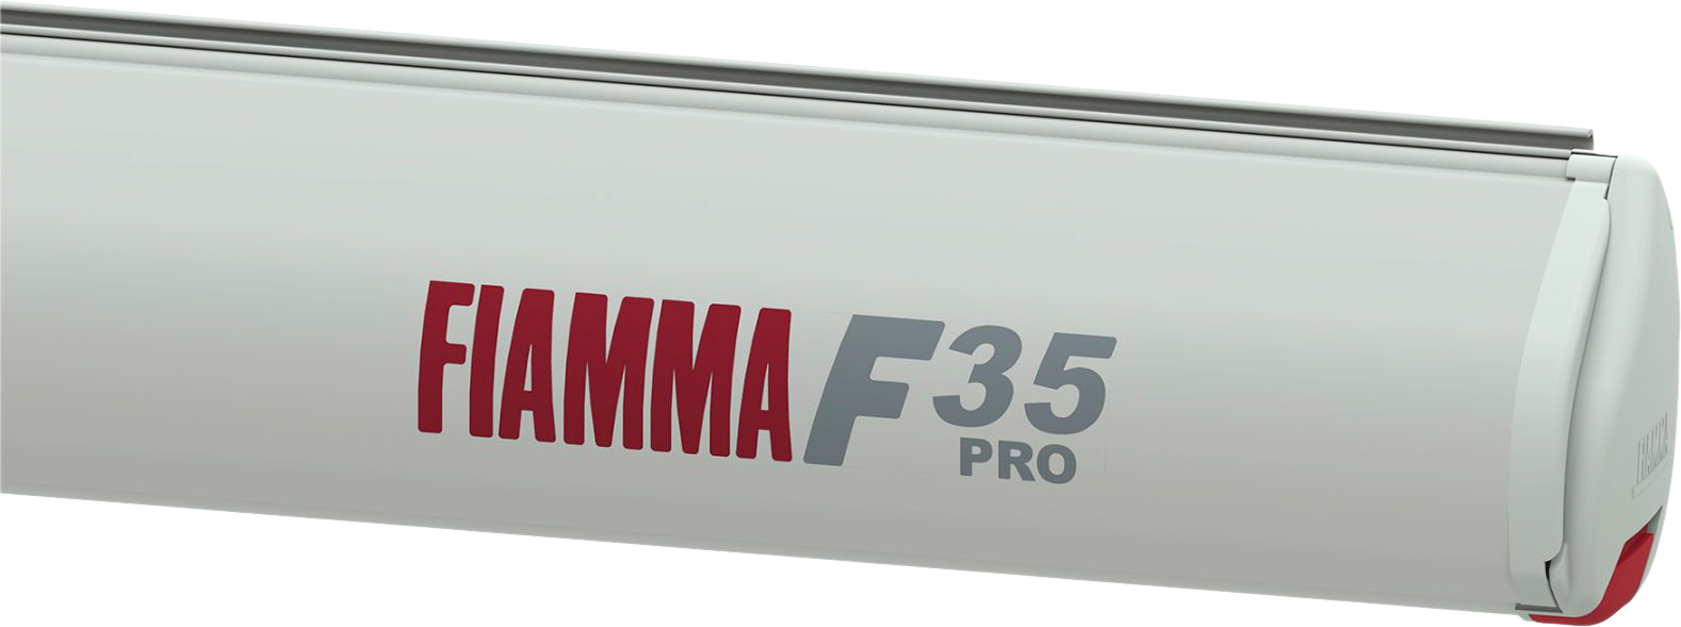 Fiamma F35 Pro 250 Markise Gehäusefarbe Titanium Tuchfarbe Royal Blue 250 cm